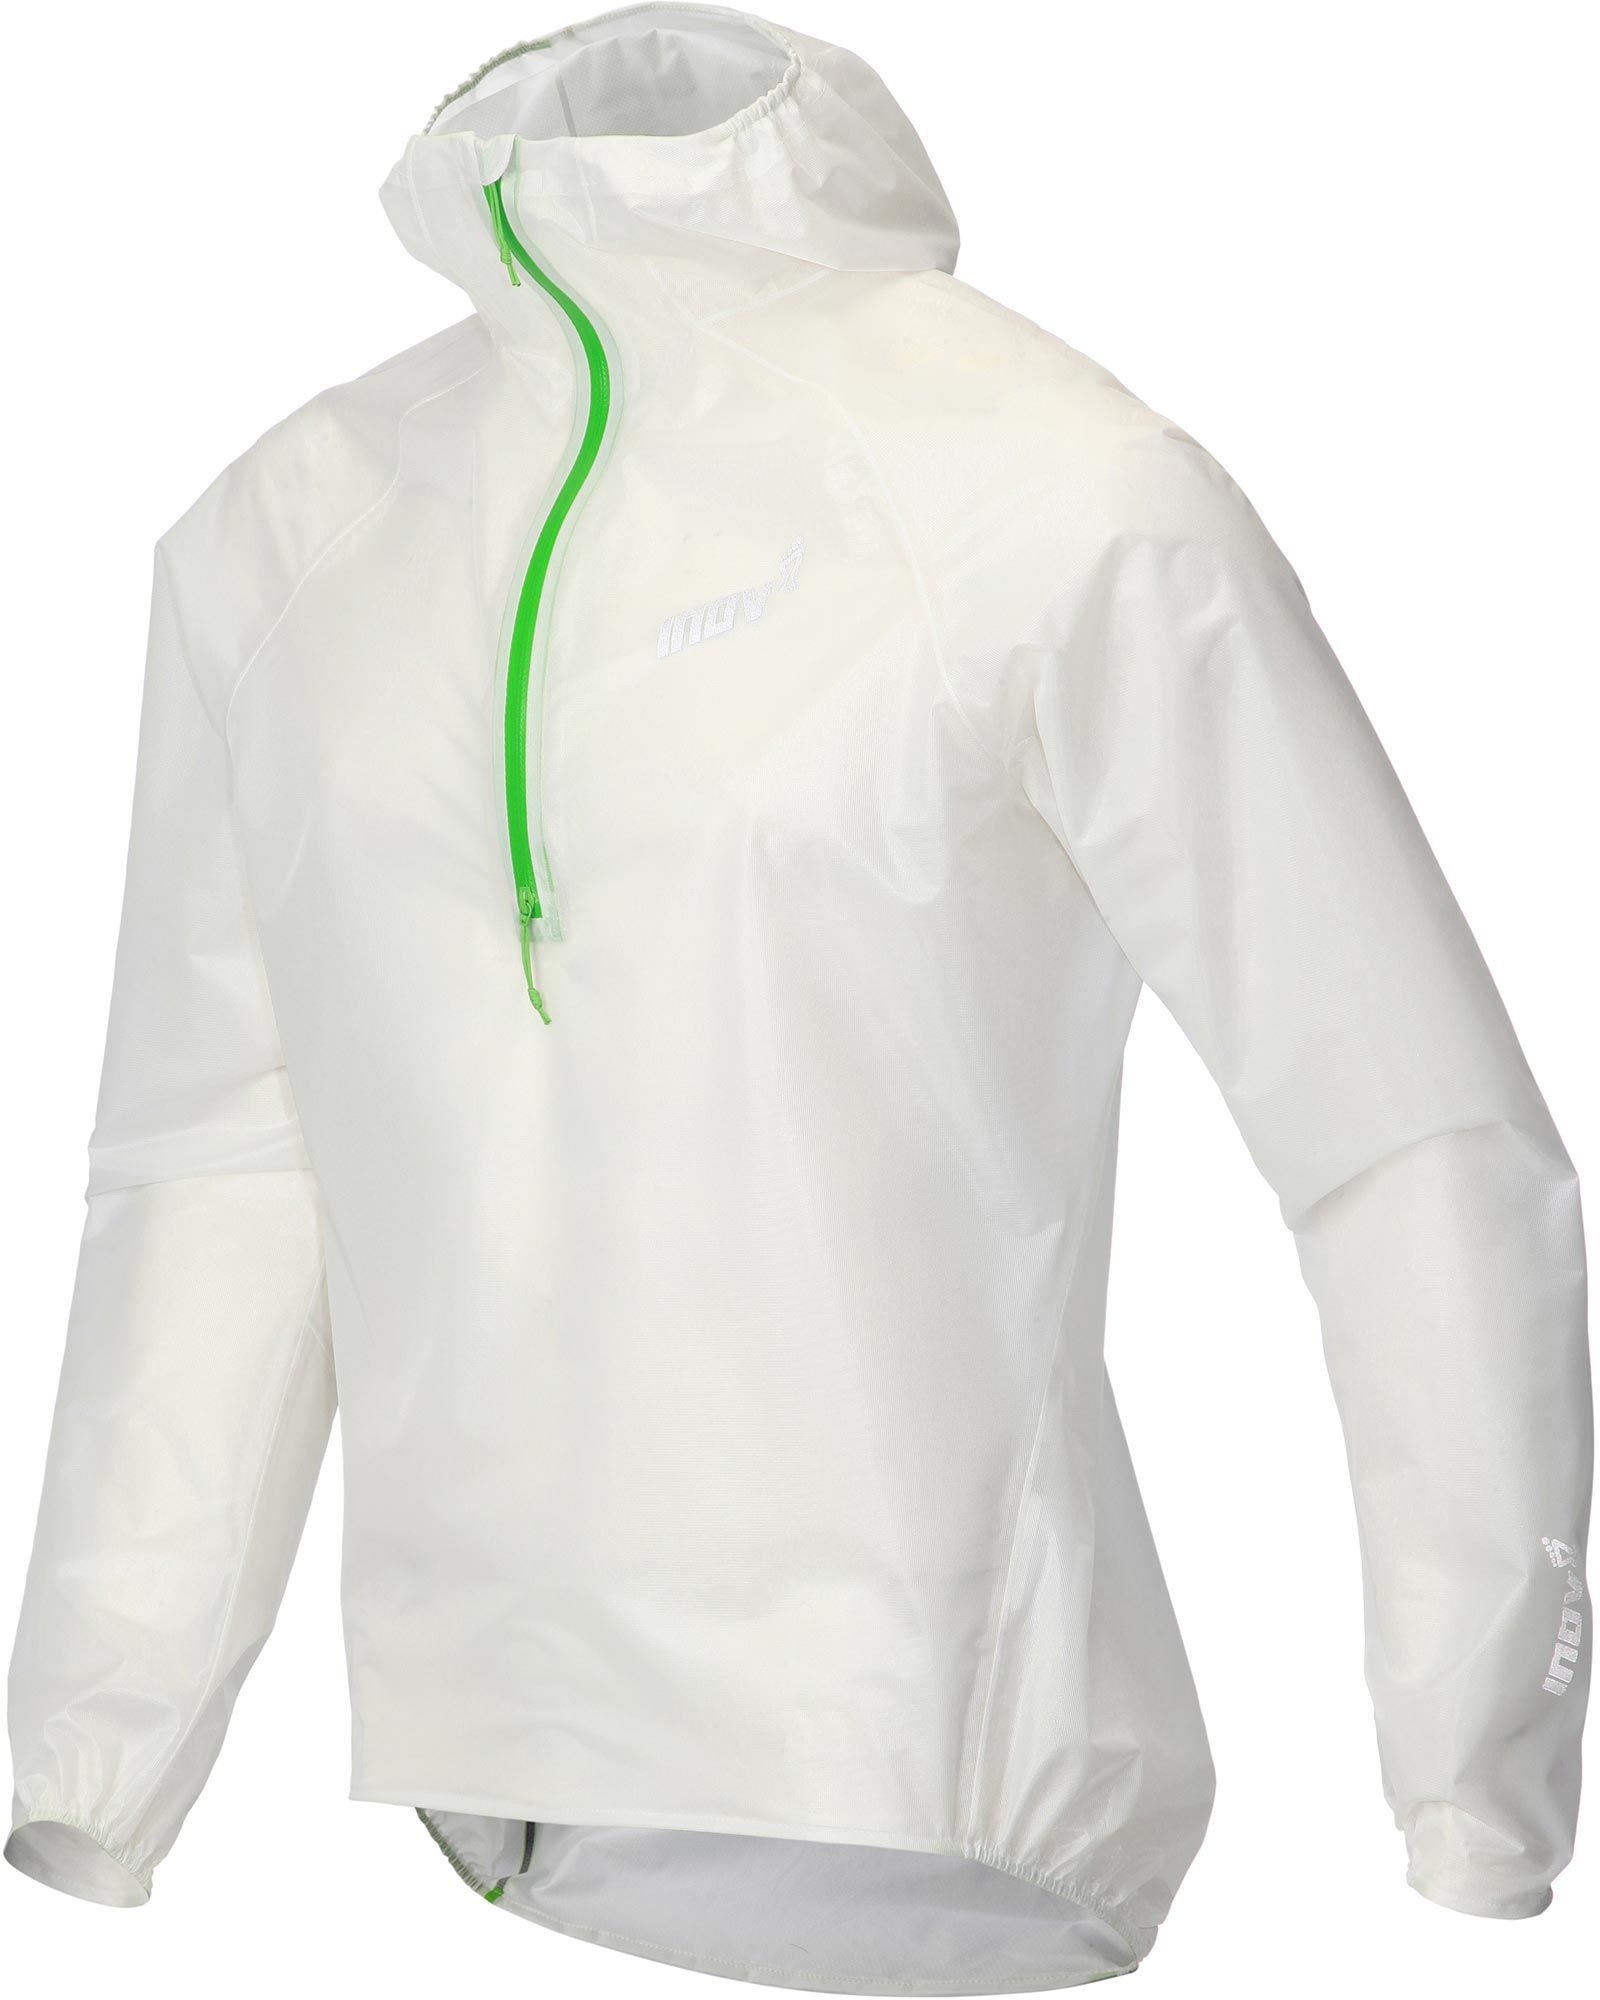 Inov8 Ultrashell Half Zip Jacket - Waterproof, Lightweight & Durable